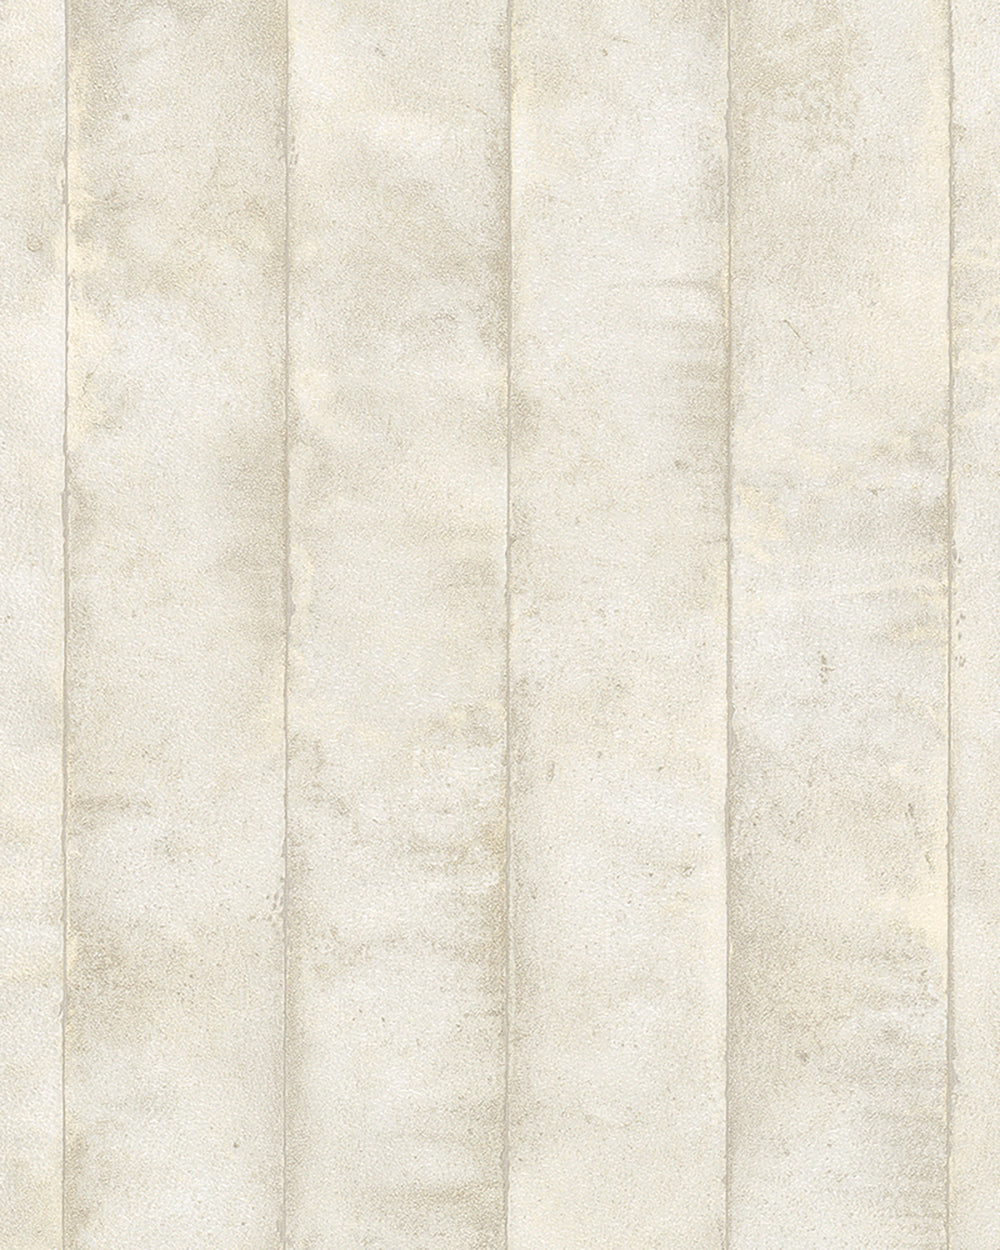 Avalon - Textured Concrete Panels industrial wallpaper Marburg Roll Light Beige  31617